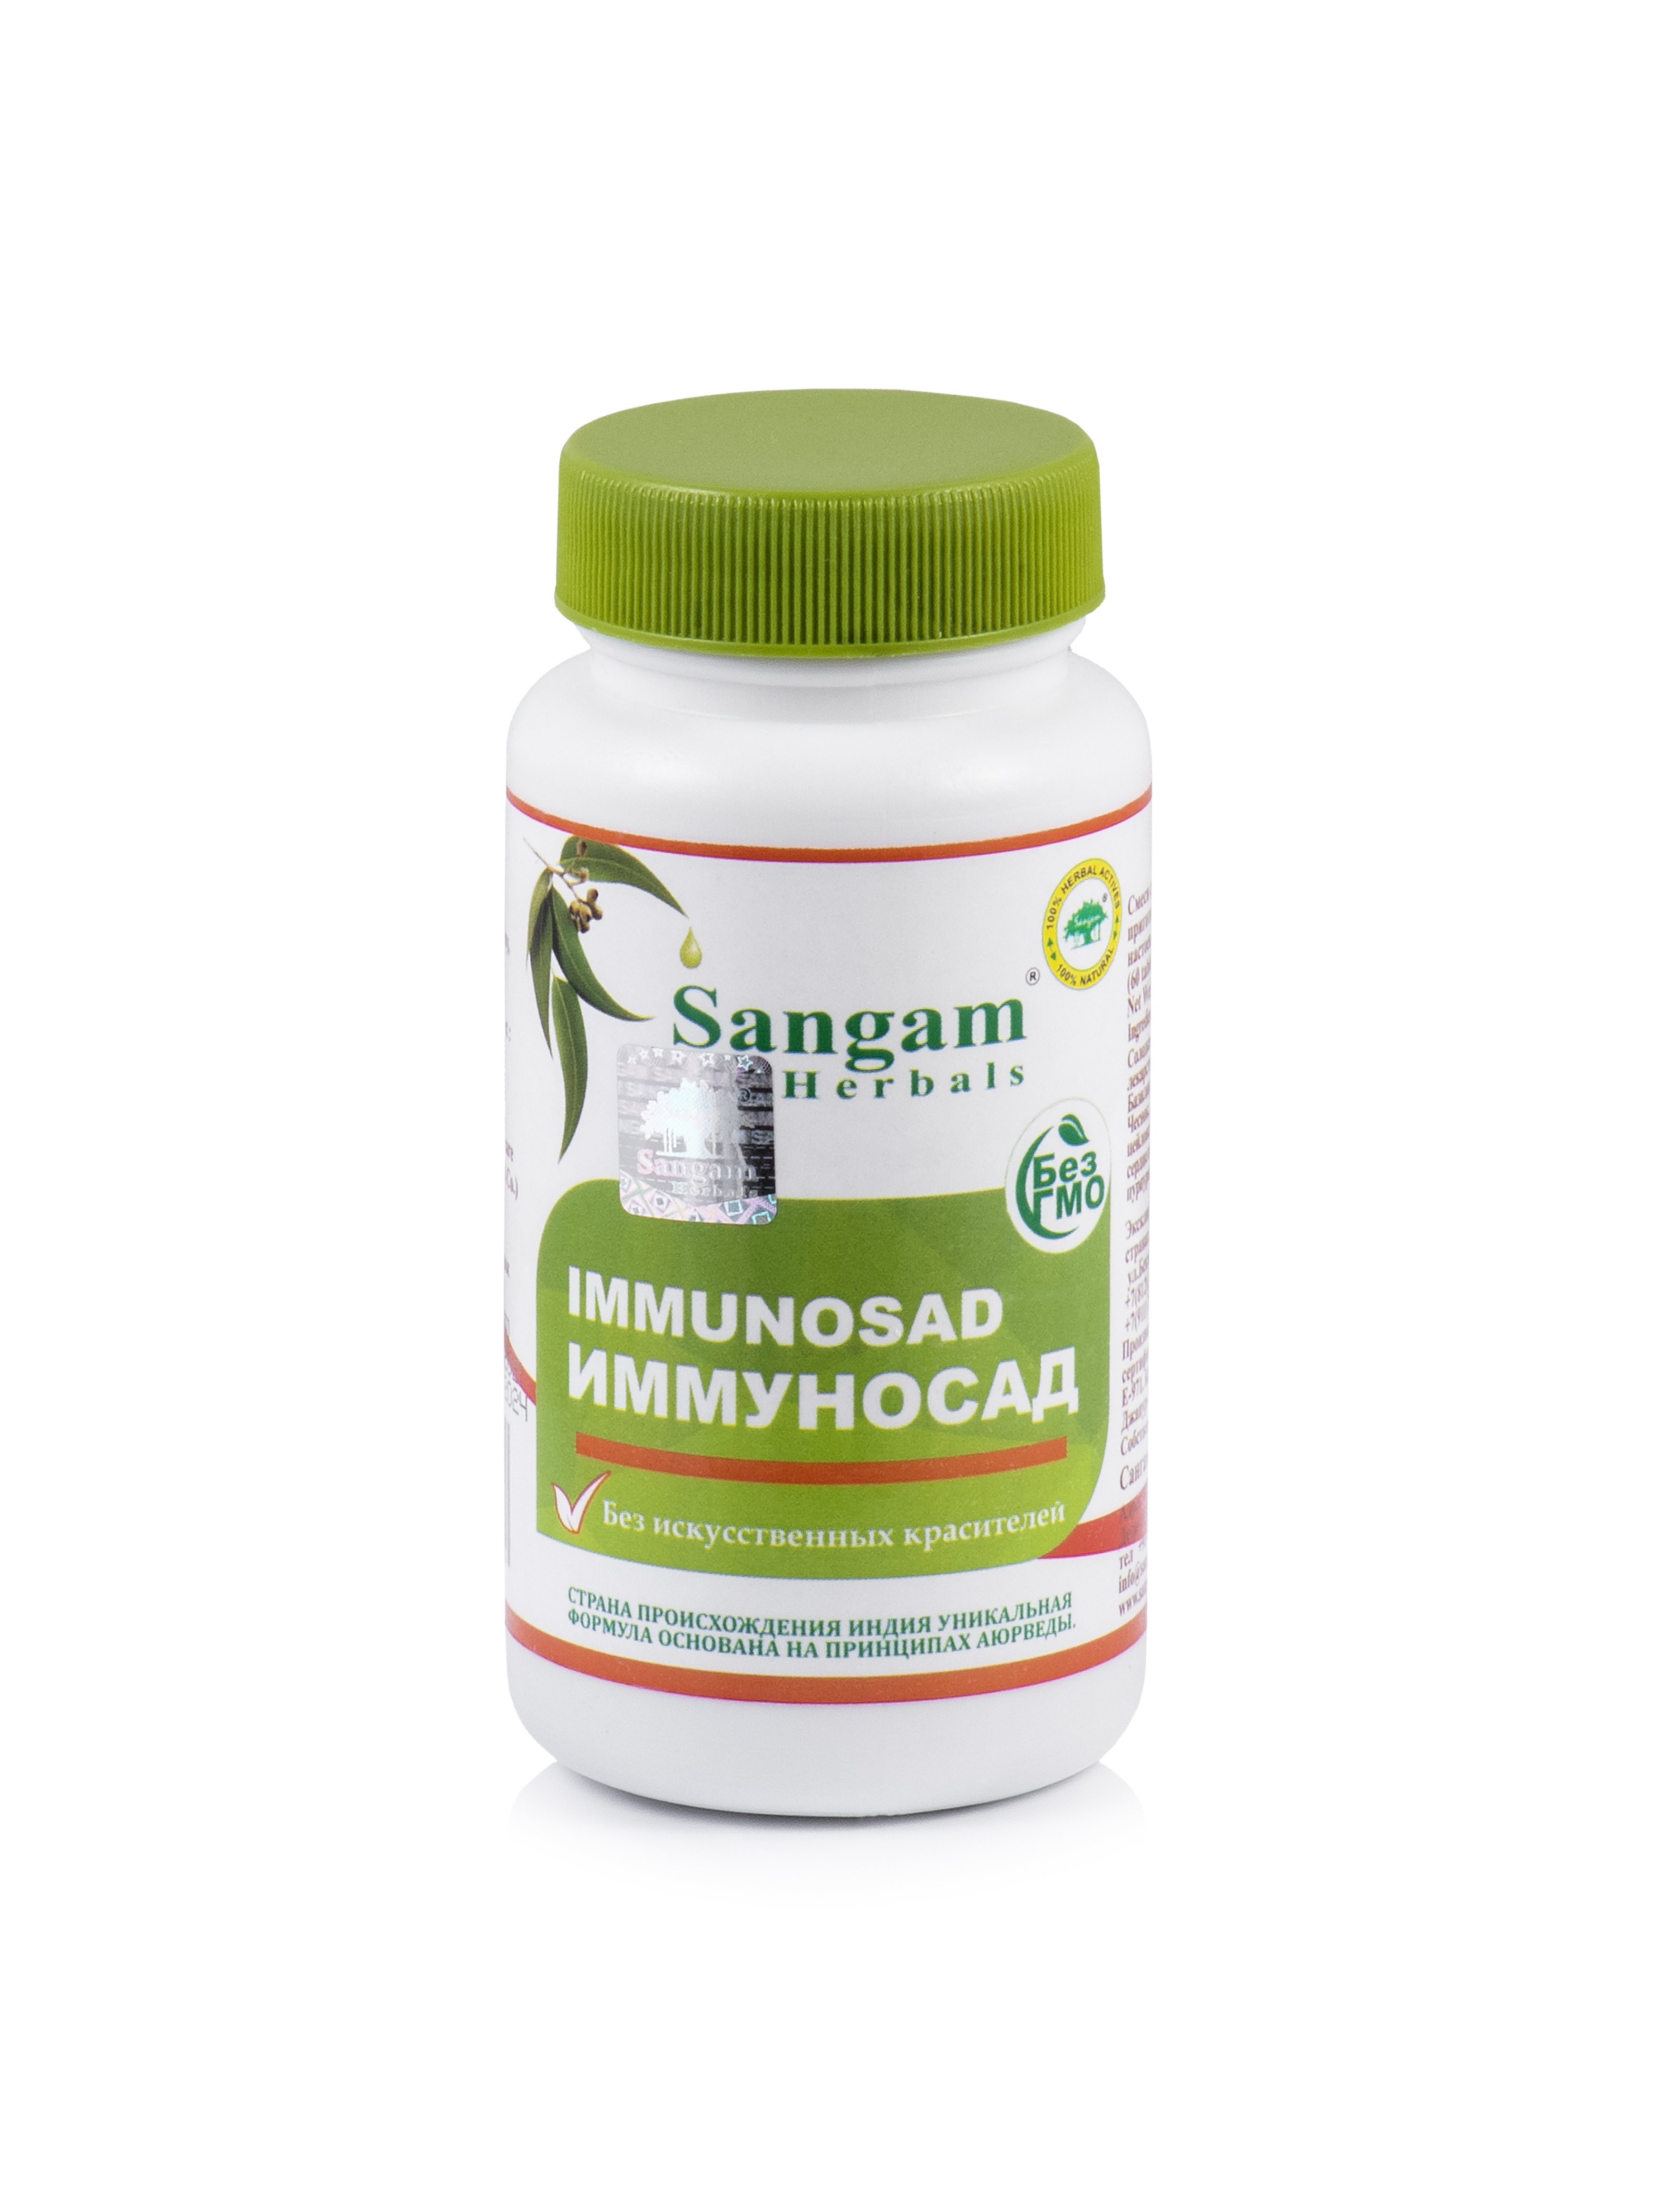 IMMUNOSAD, Sangam Herbals (ИММУНОСАД, Сангам Хербалс), 60 таб. по 750 мг.